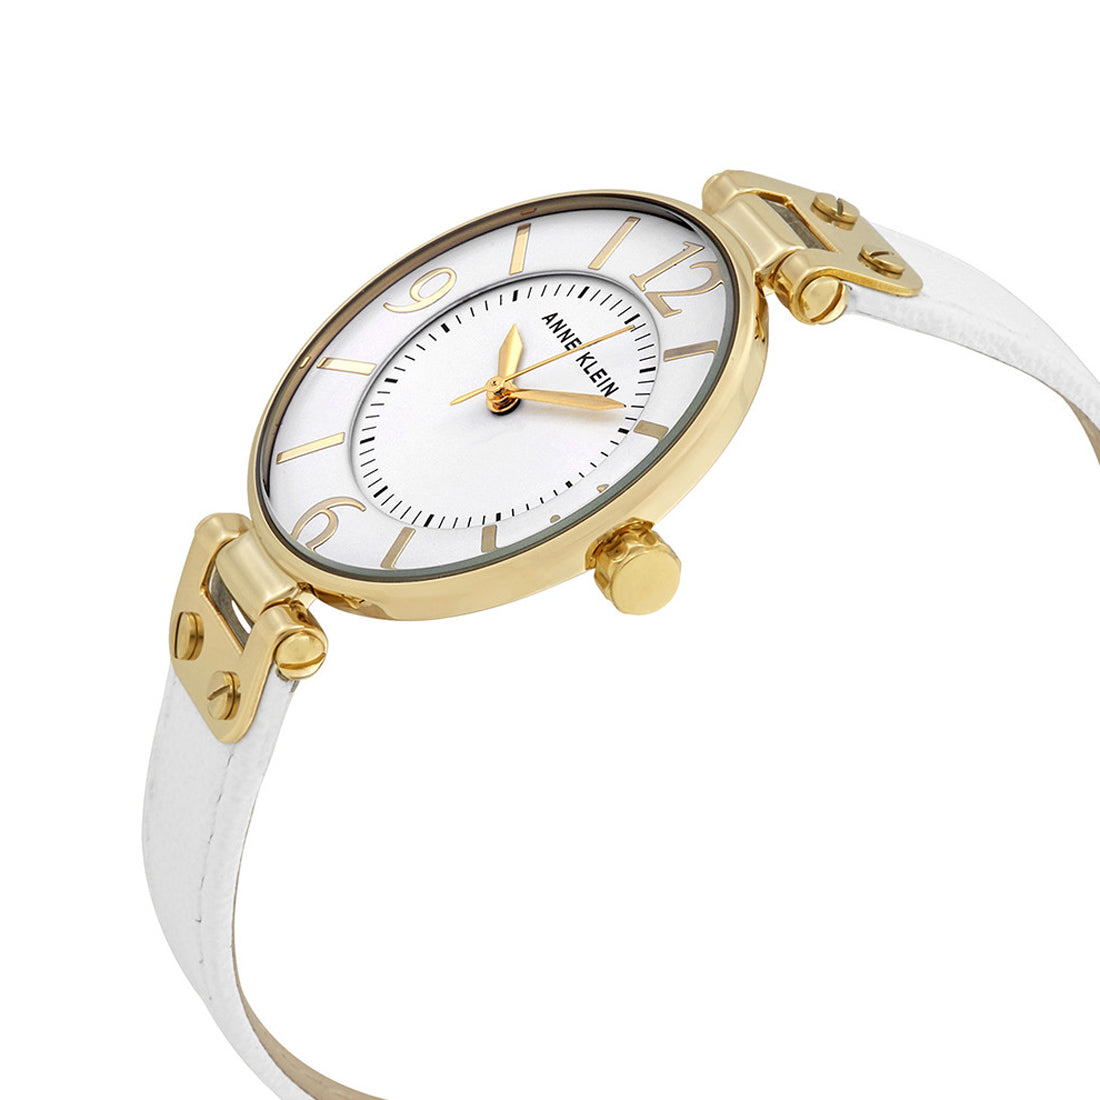 Anne Klein Women's Quartz Watch With White Dial - AK-0120